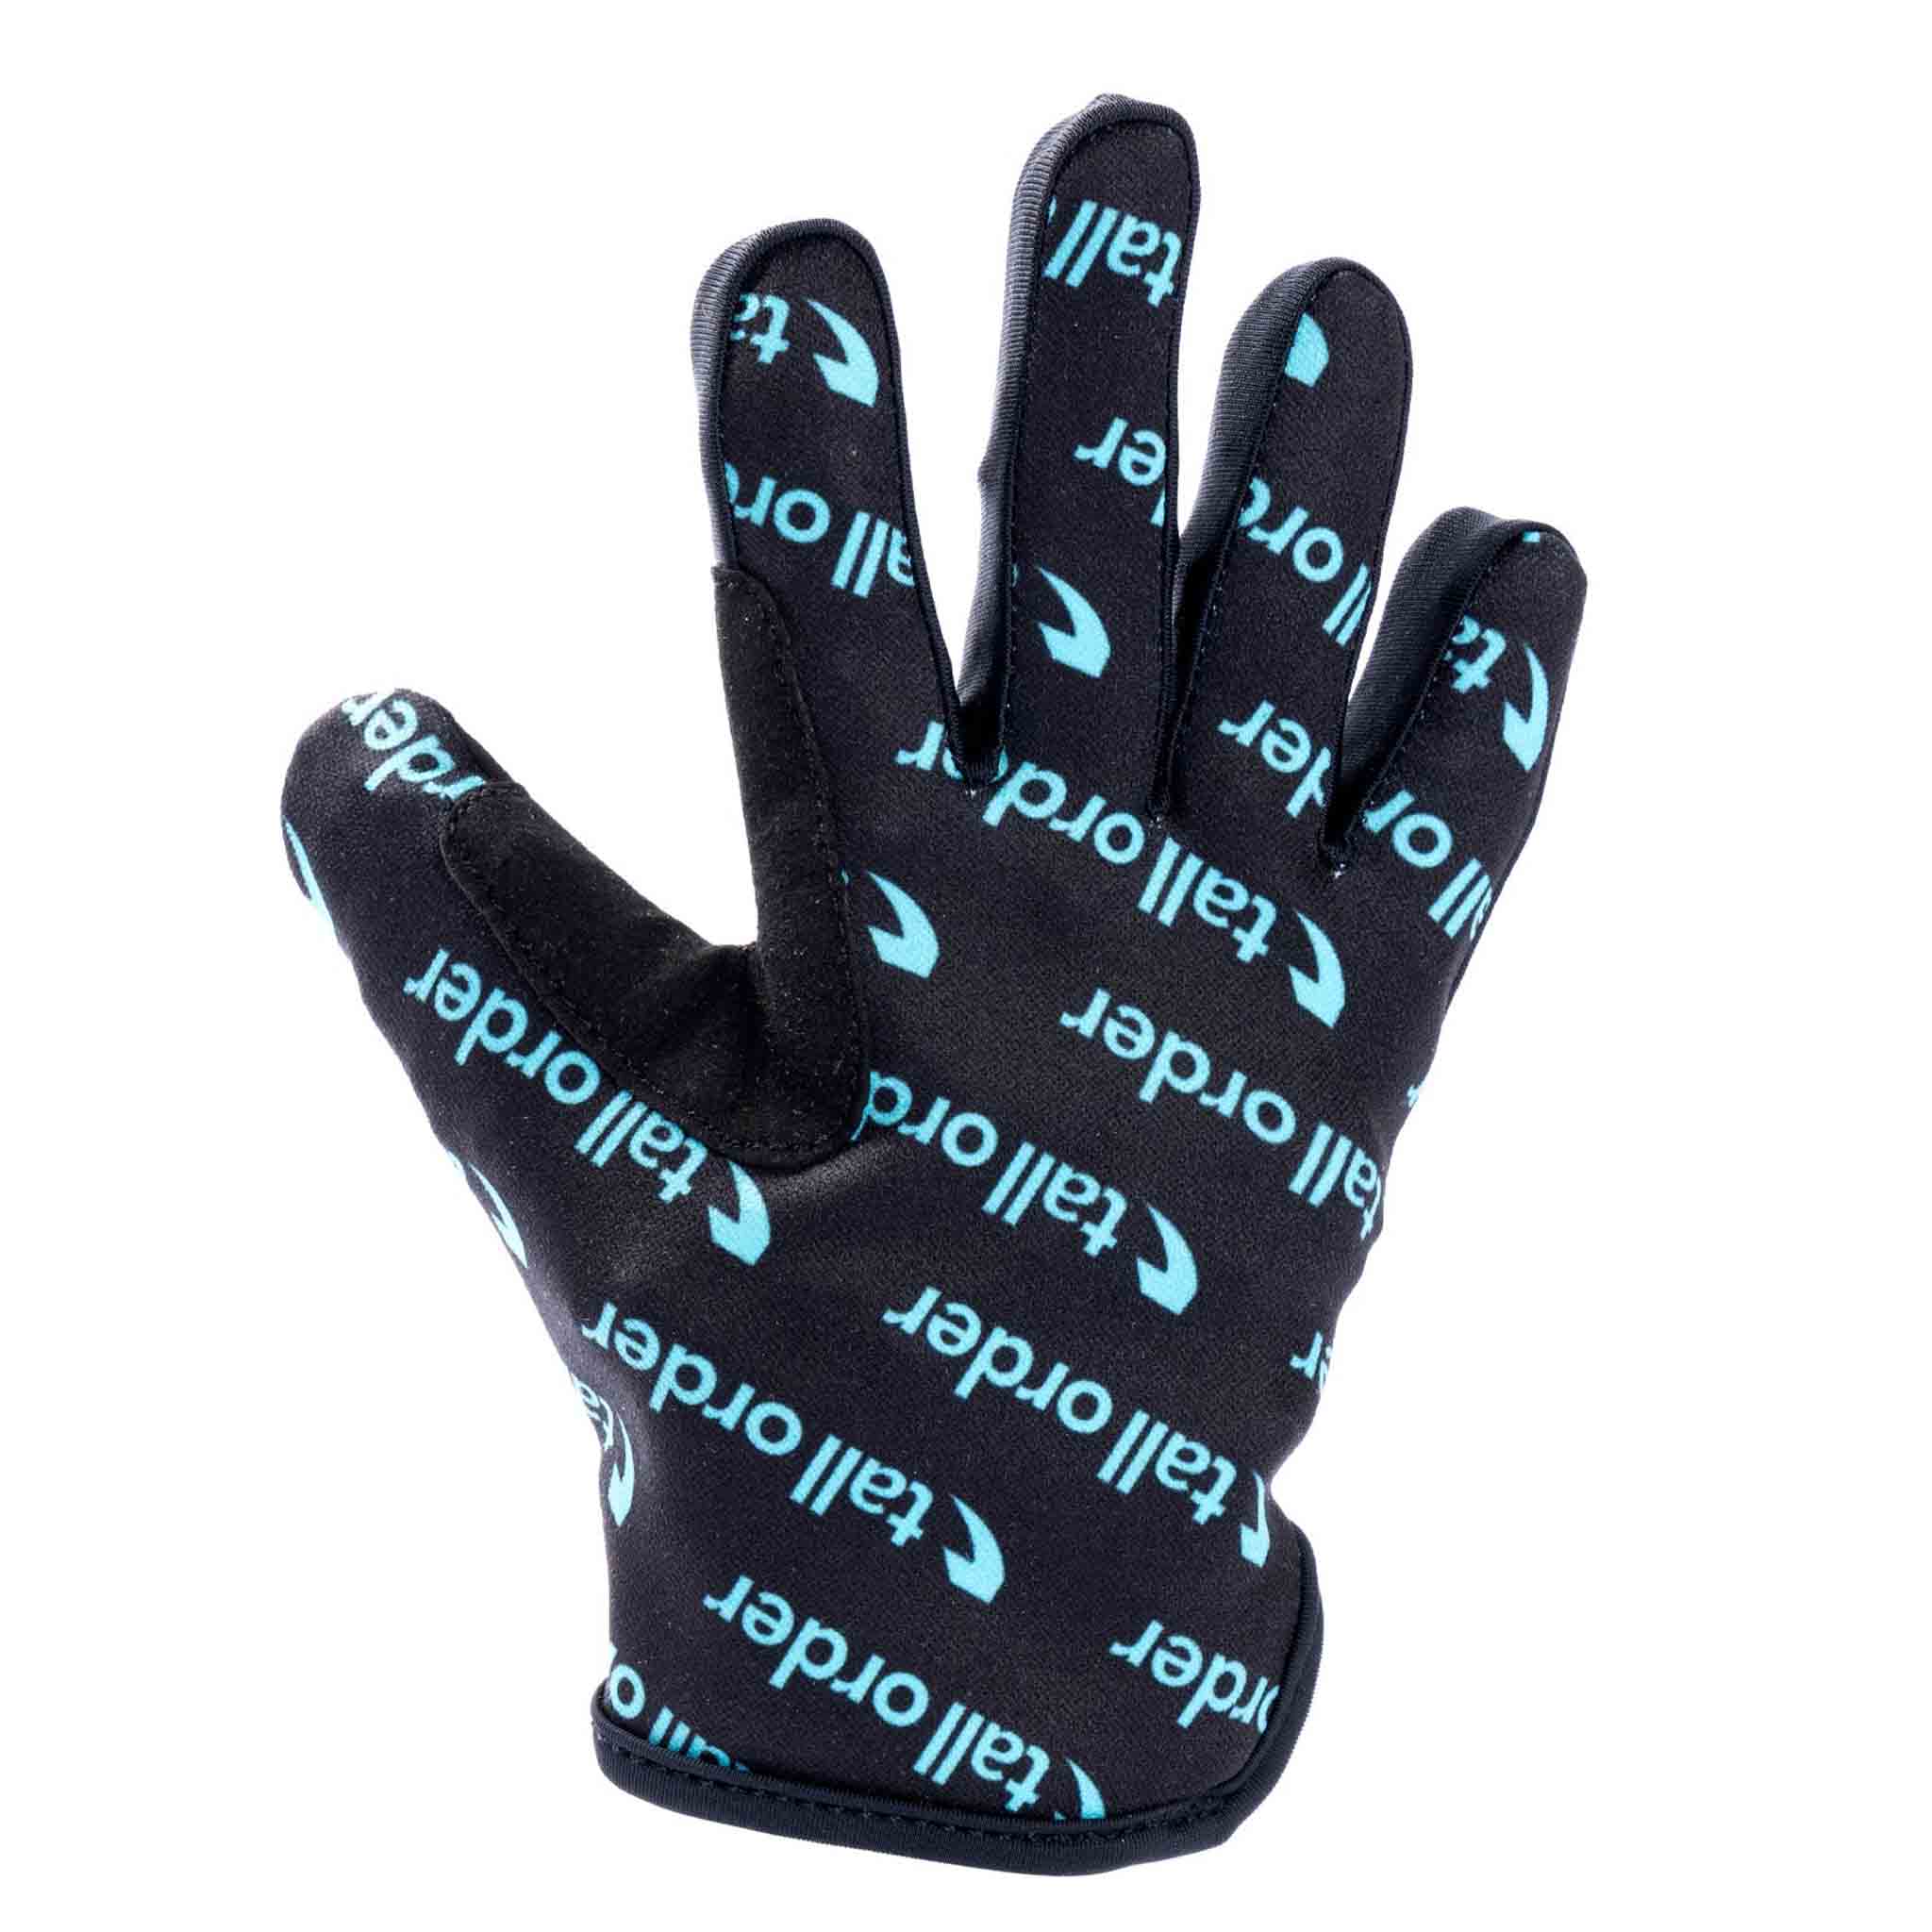 Tall Order Barspin Print Youth Glove - Black With Teal Print | Backyard UK BMX Shop